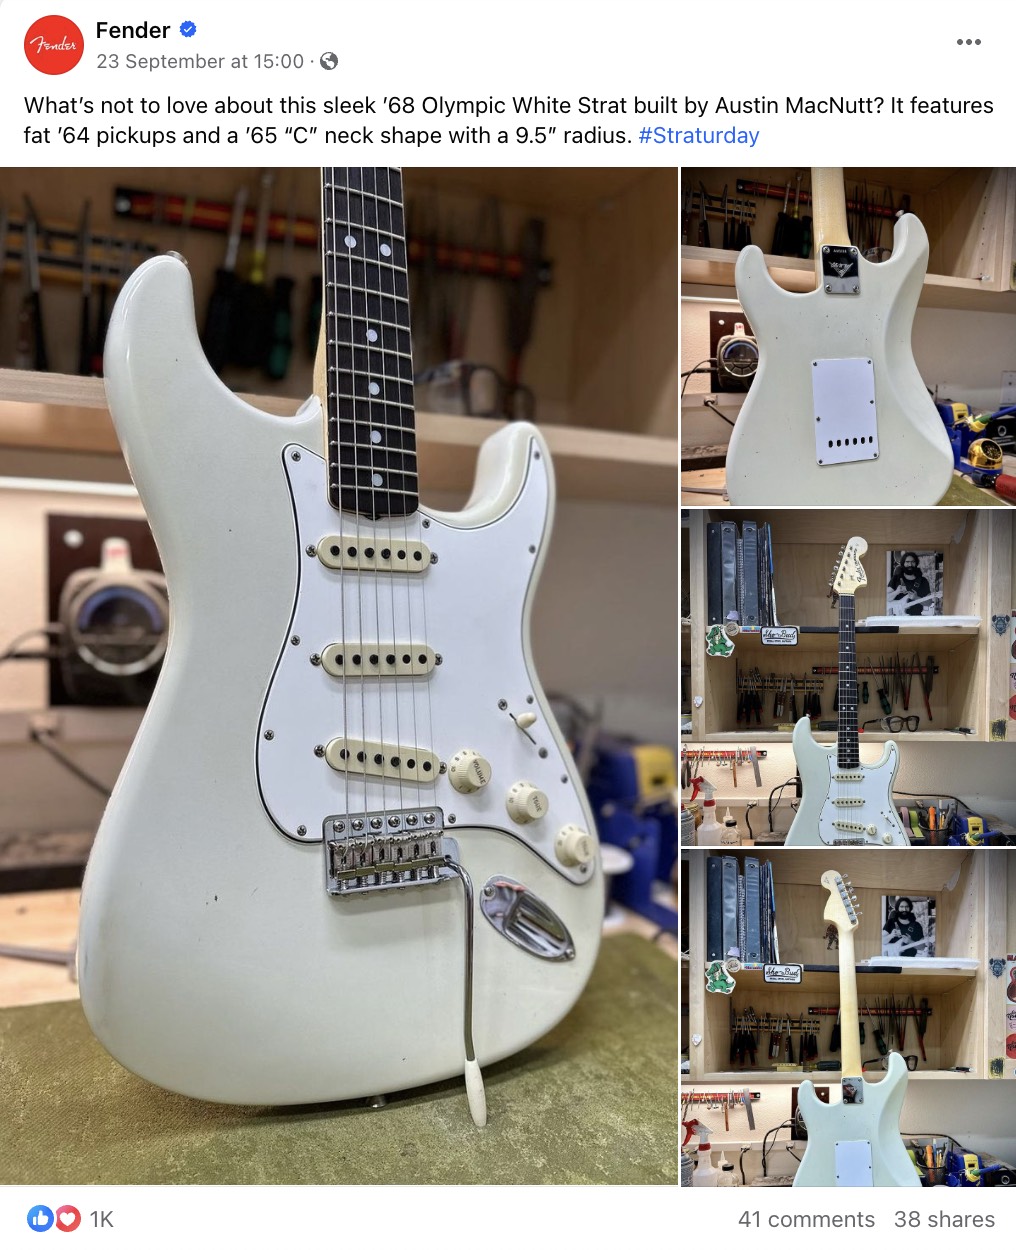 Fender's Facebook station  connected  White Strat guitar